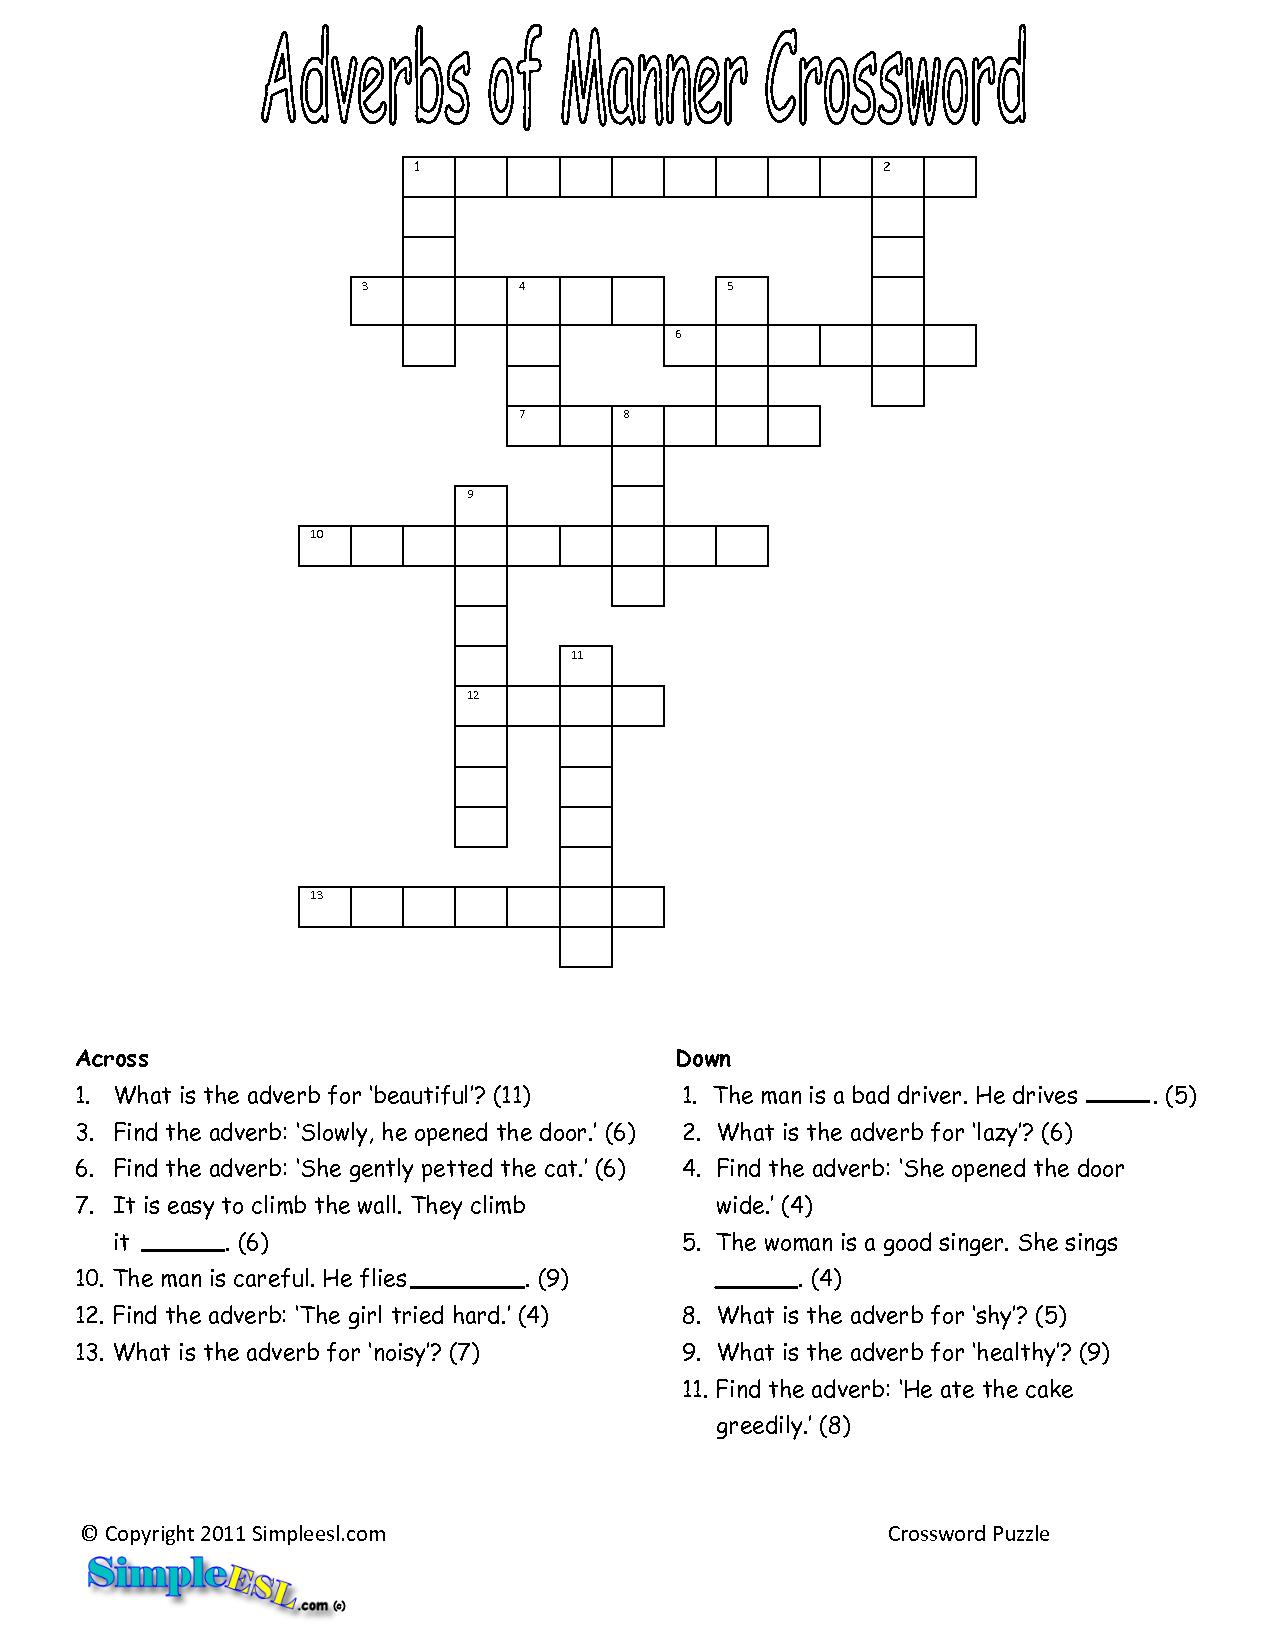 Adverb Crossword Puzzle Image